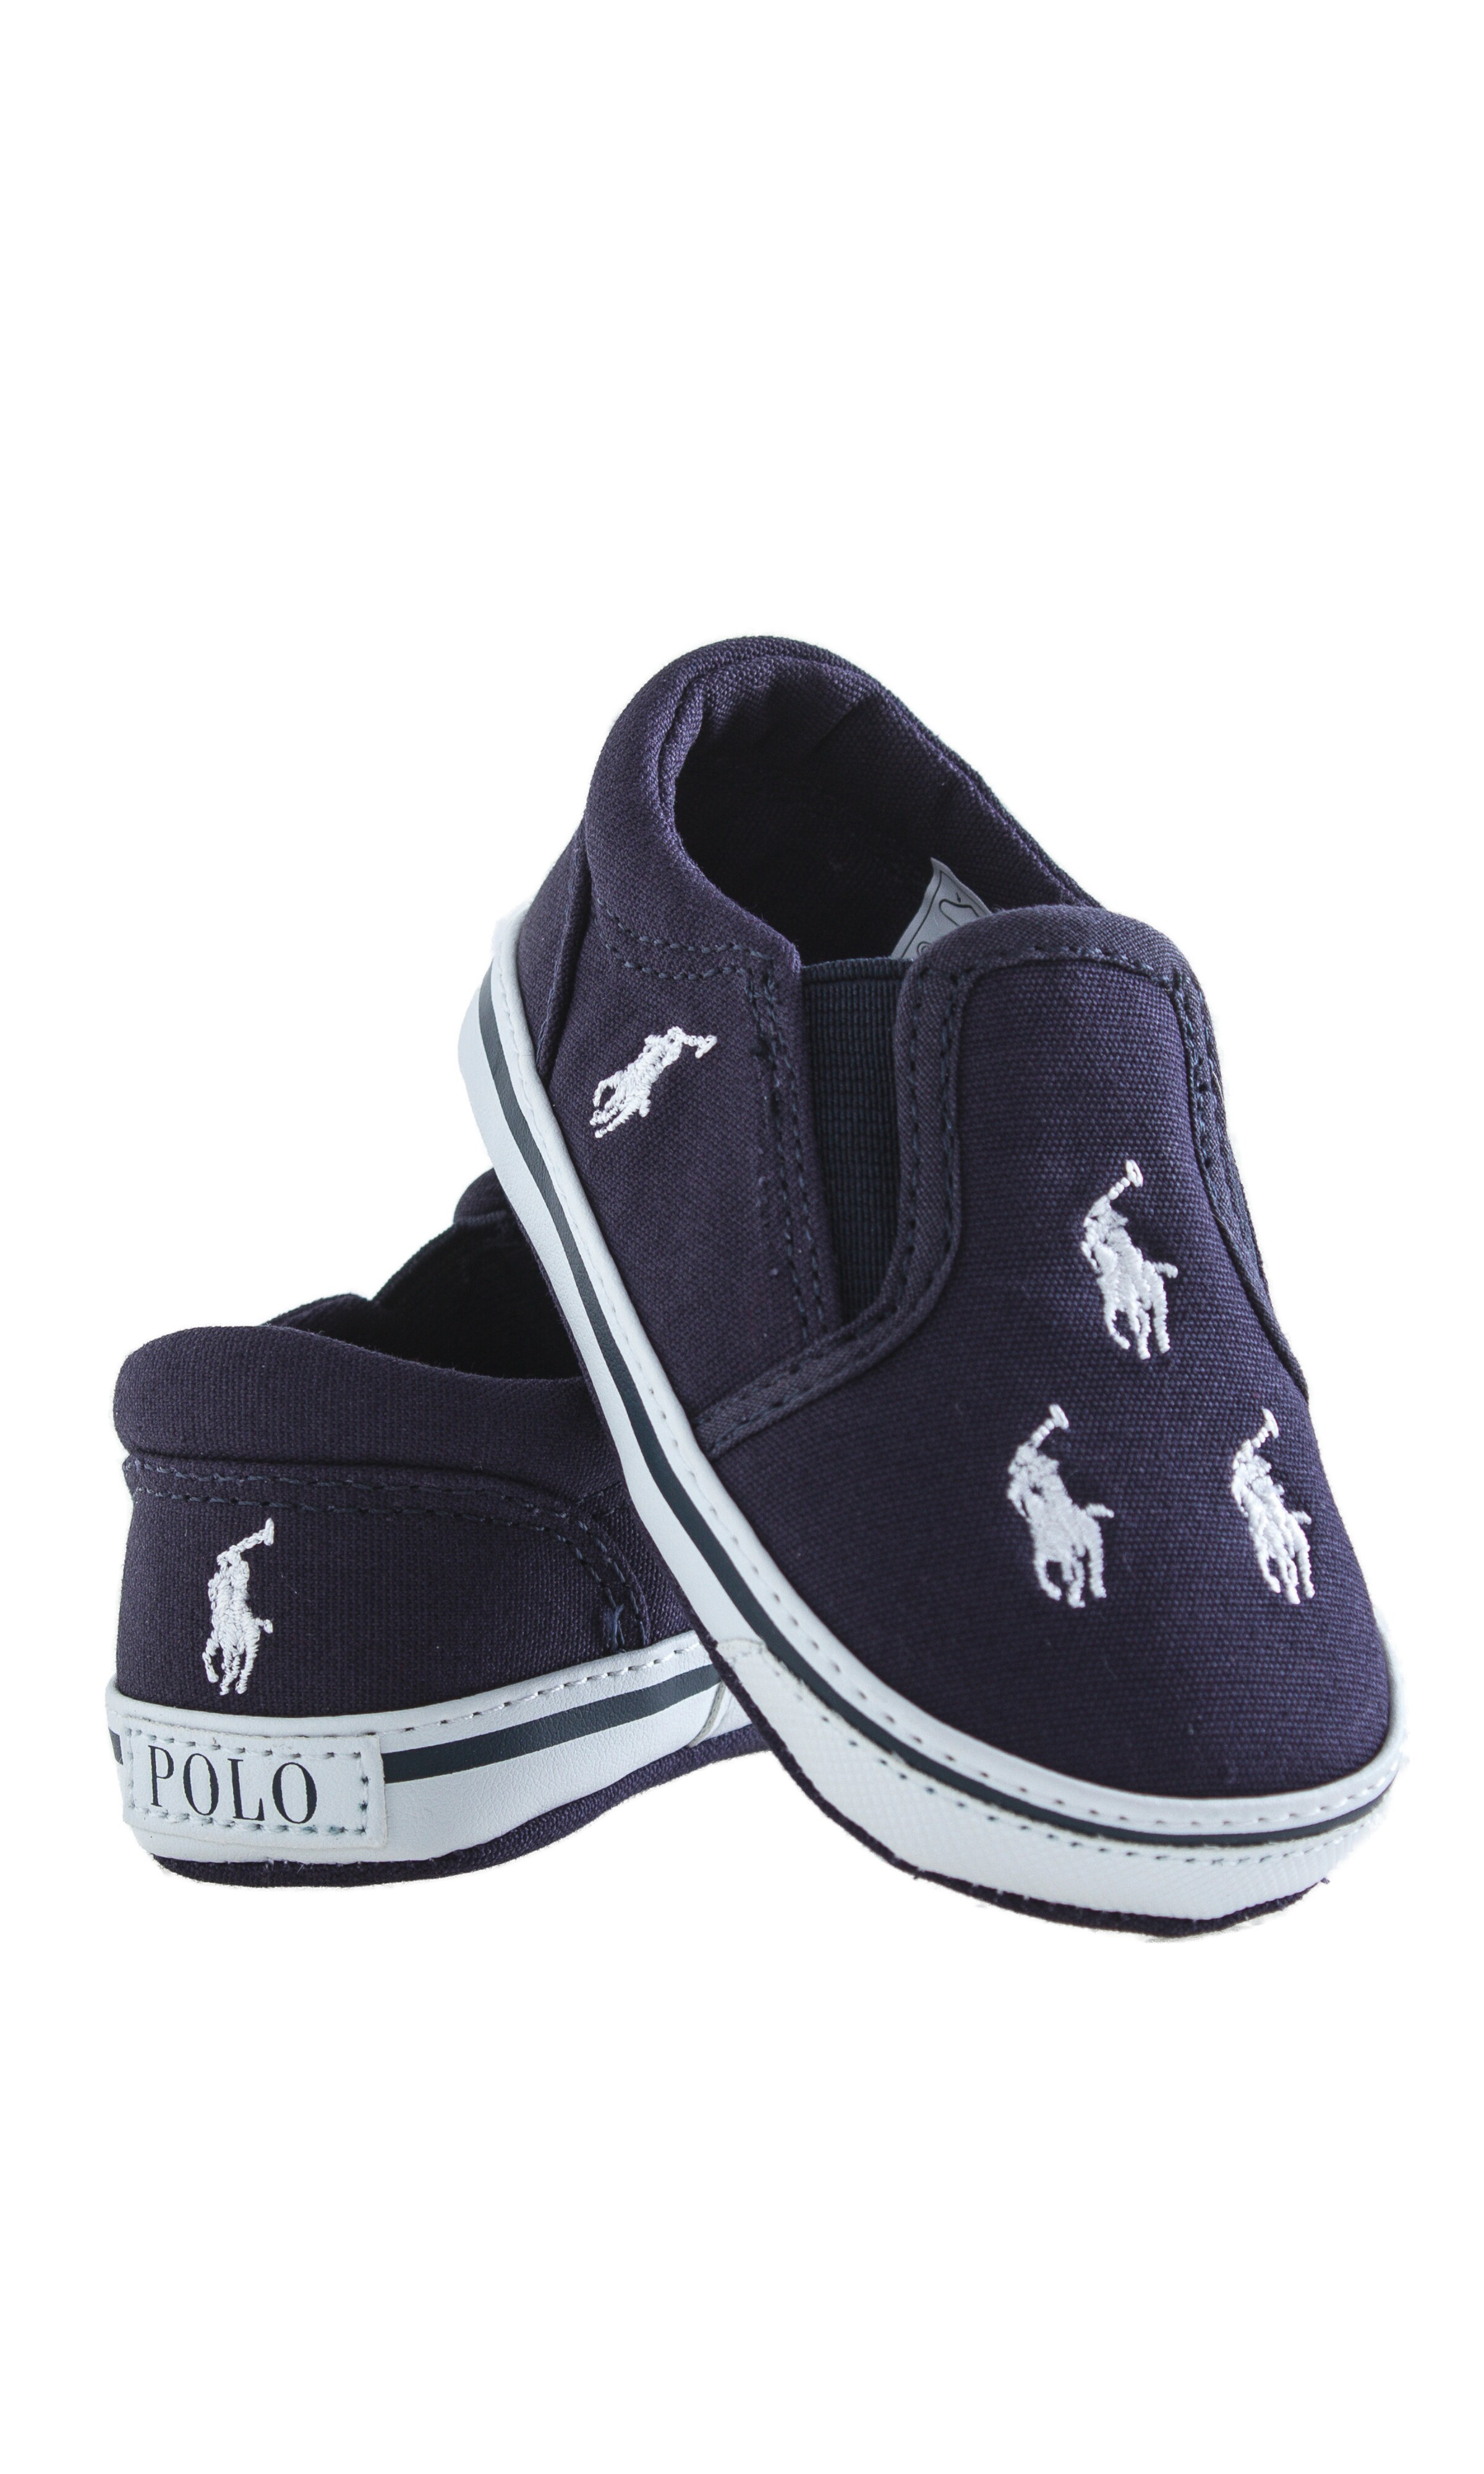 Navy blue baby shoes, Ralph Lauren - Celebrity Club